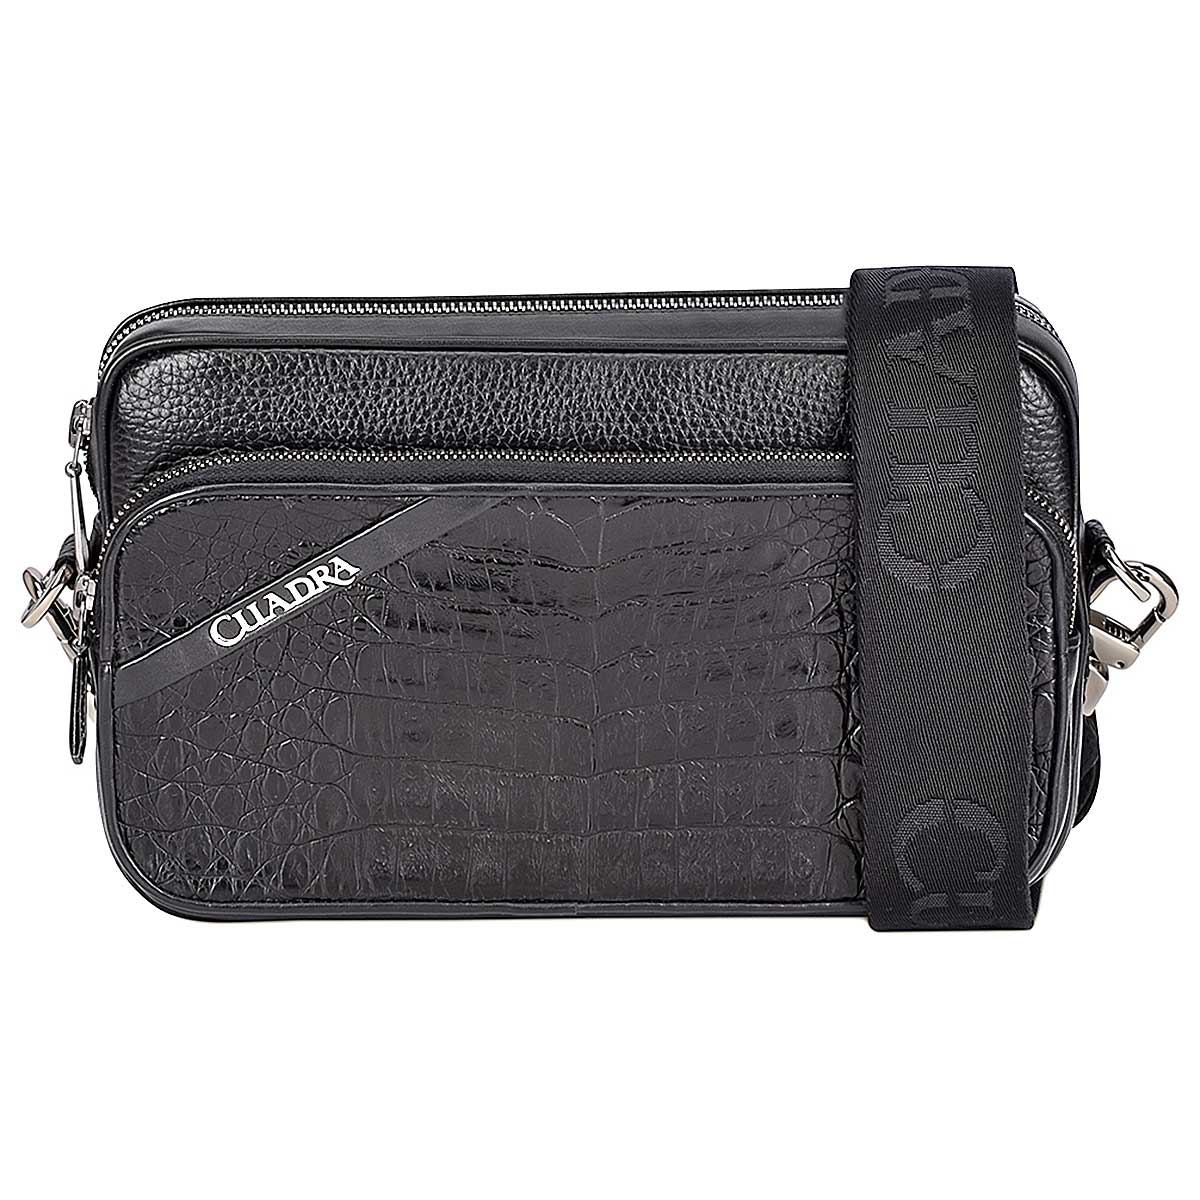 Black exotic leather cell phone bag - BOD38MA - Cuadra Shop